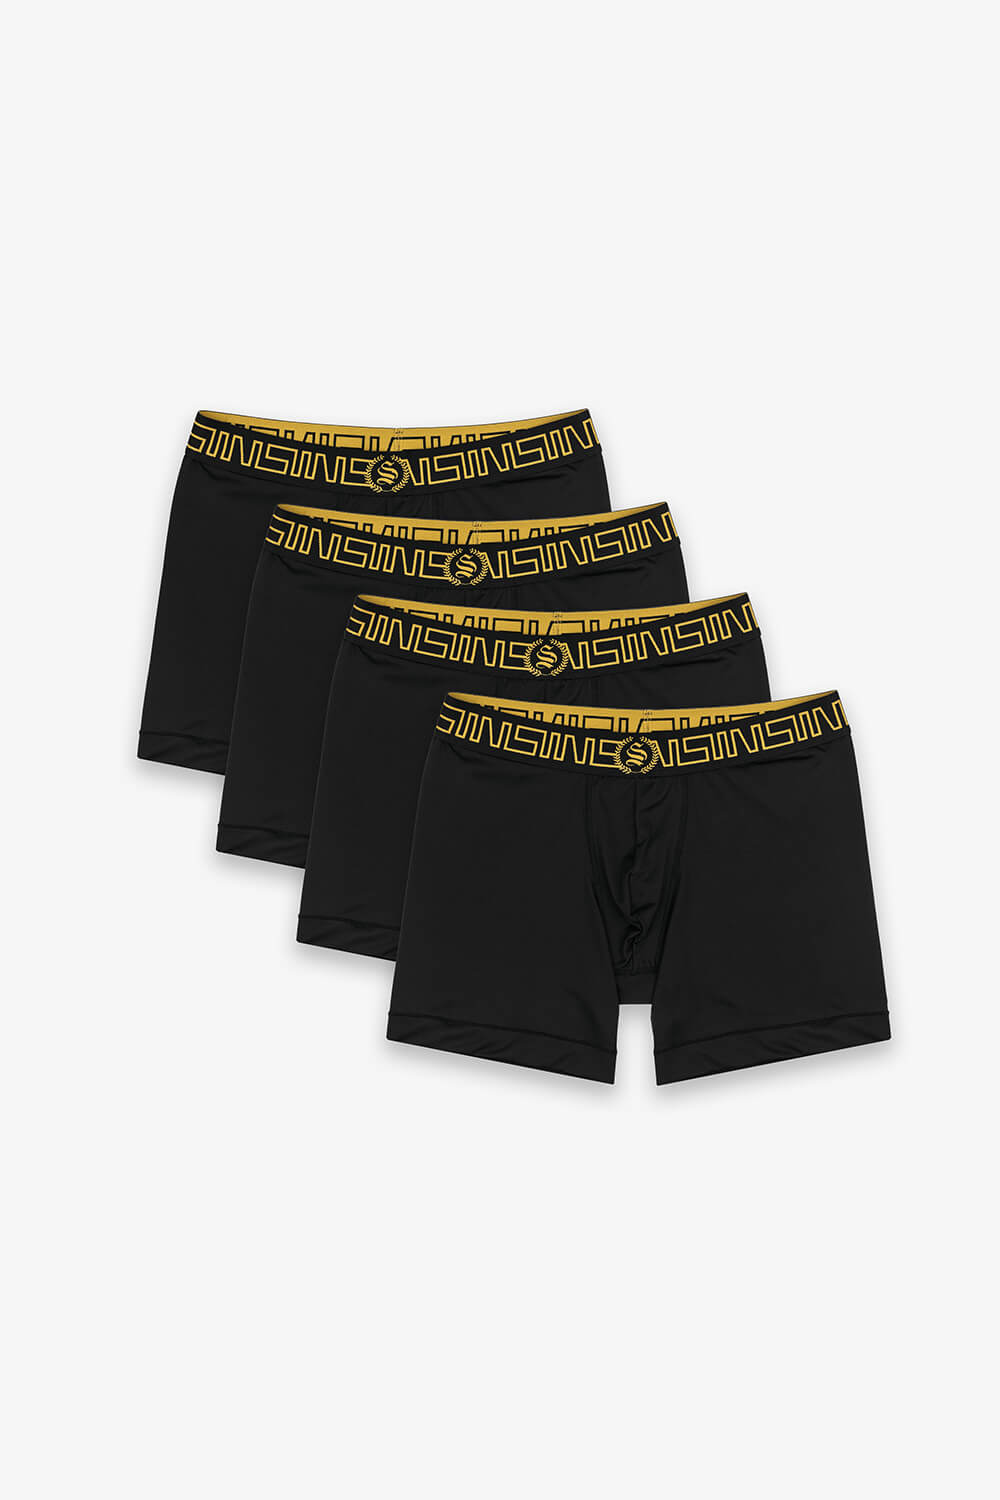 Icon Boxer Shorts - Black (4 Pack)